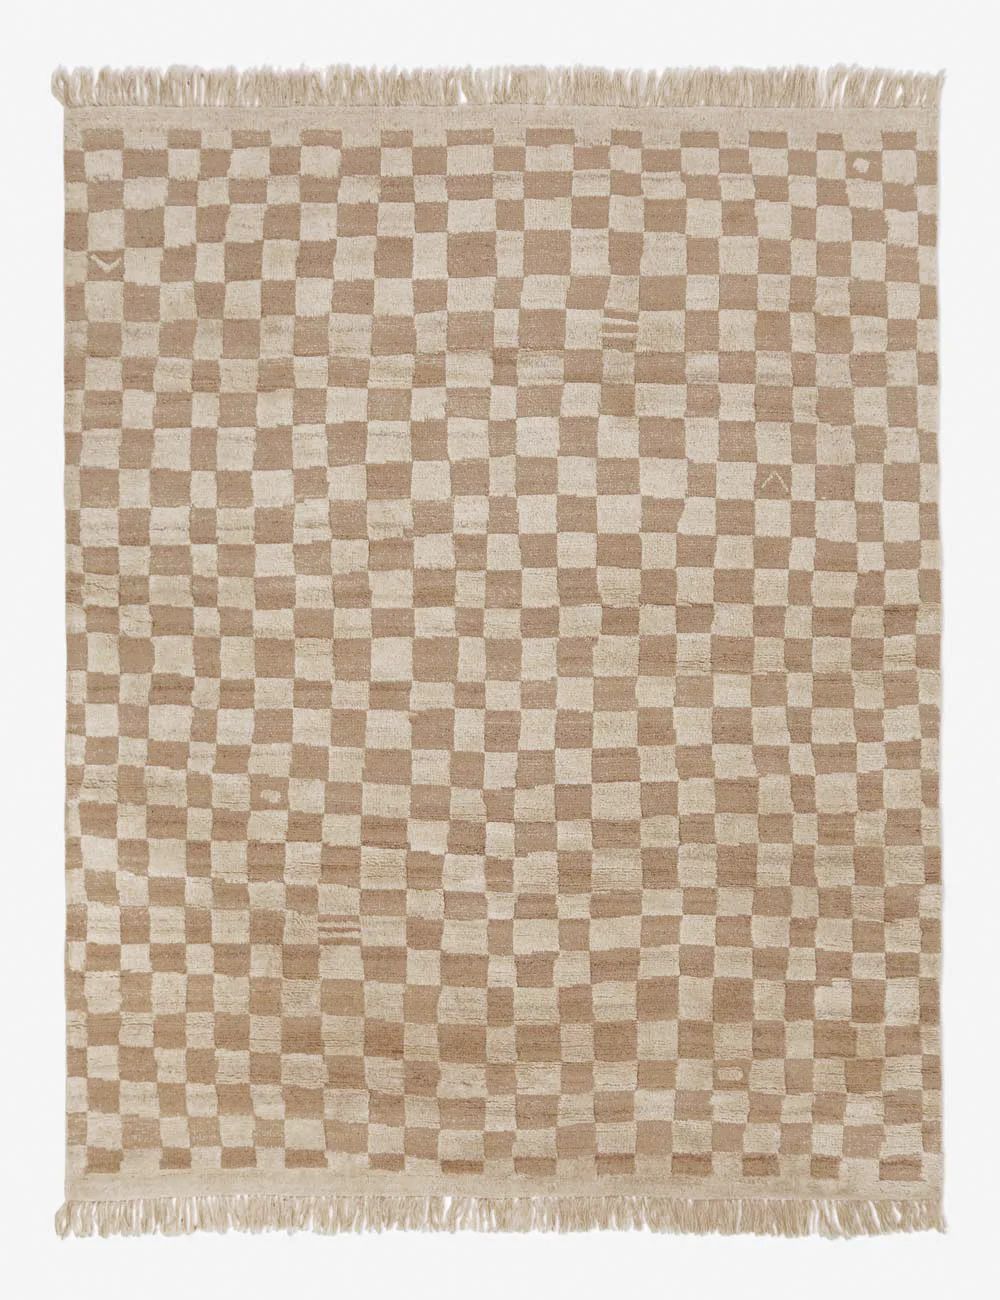 Irregular Checkerboard Hand-Knotted Wool Rug by Sarah Sherman Samuel | Lulu and Georgia 